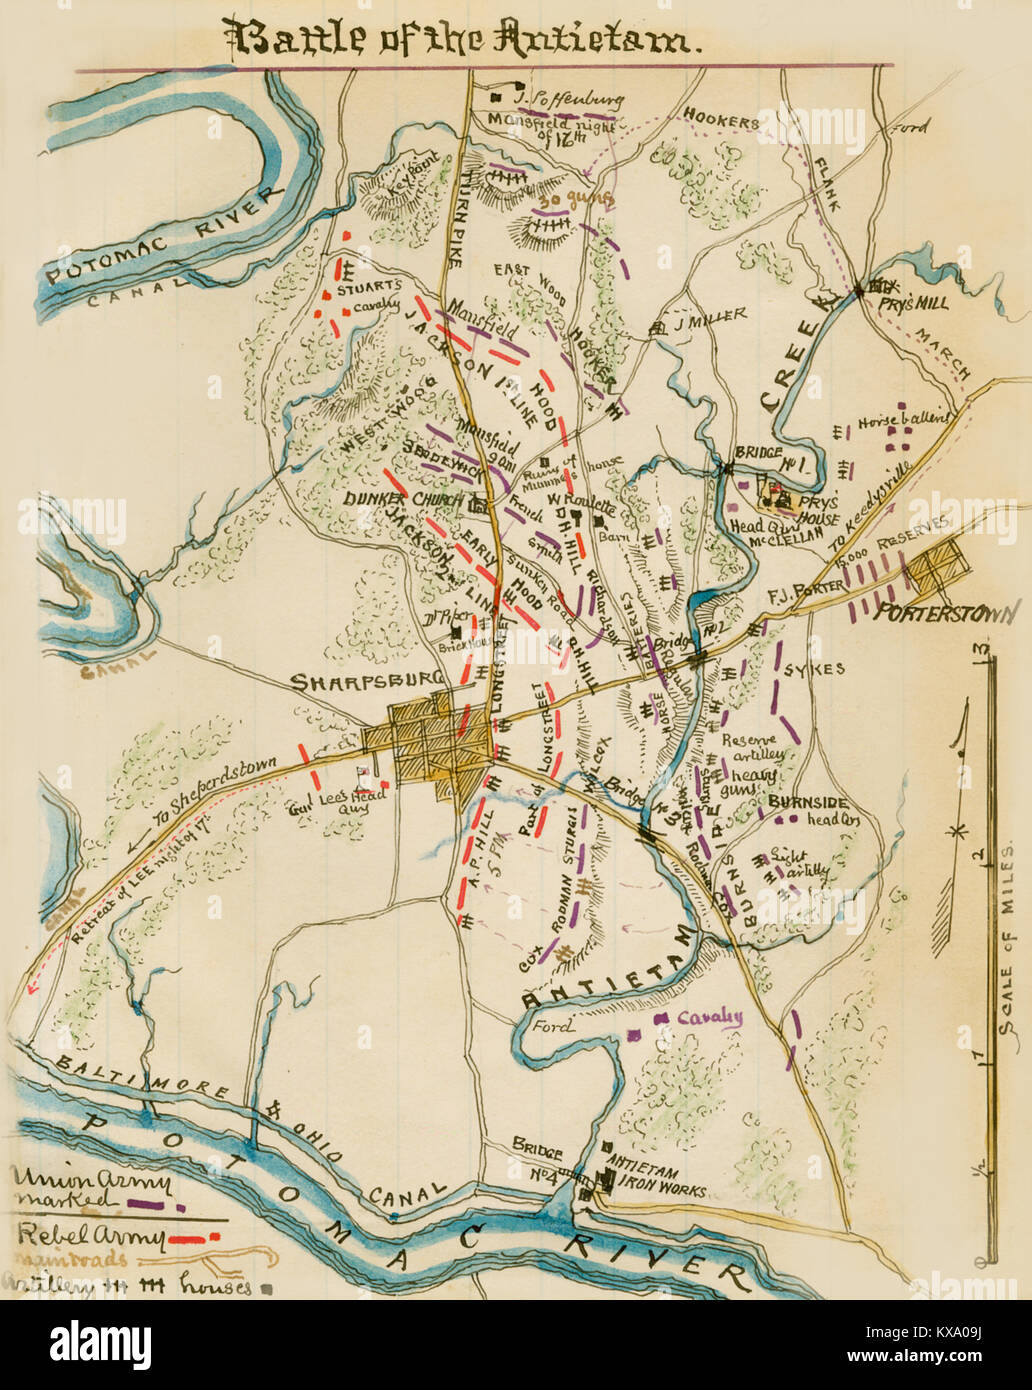 Battle of Antietam or Sharpsburg Stock Photo